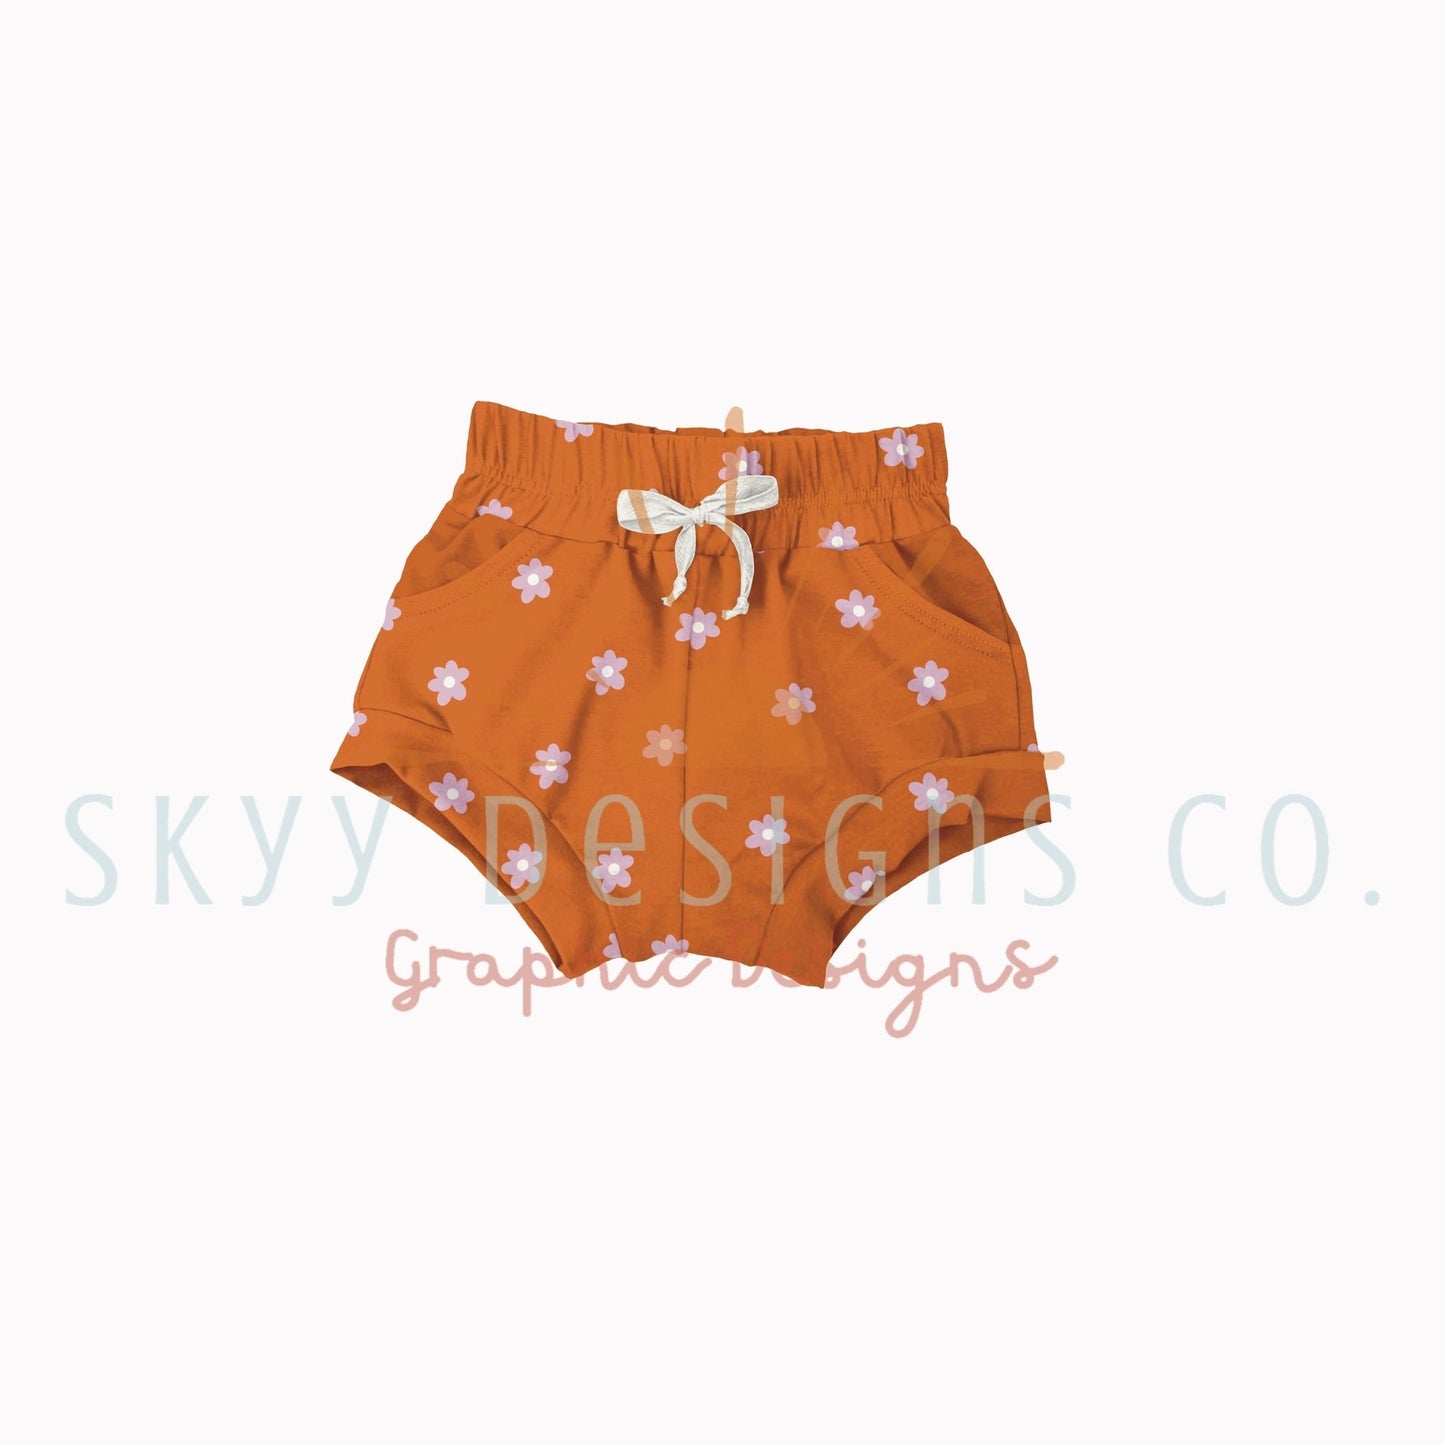 Kids shorts mock-up template - SkyyDesignsCo